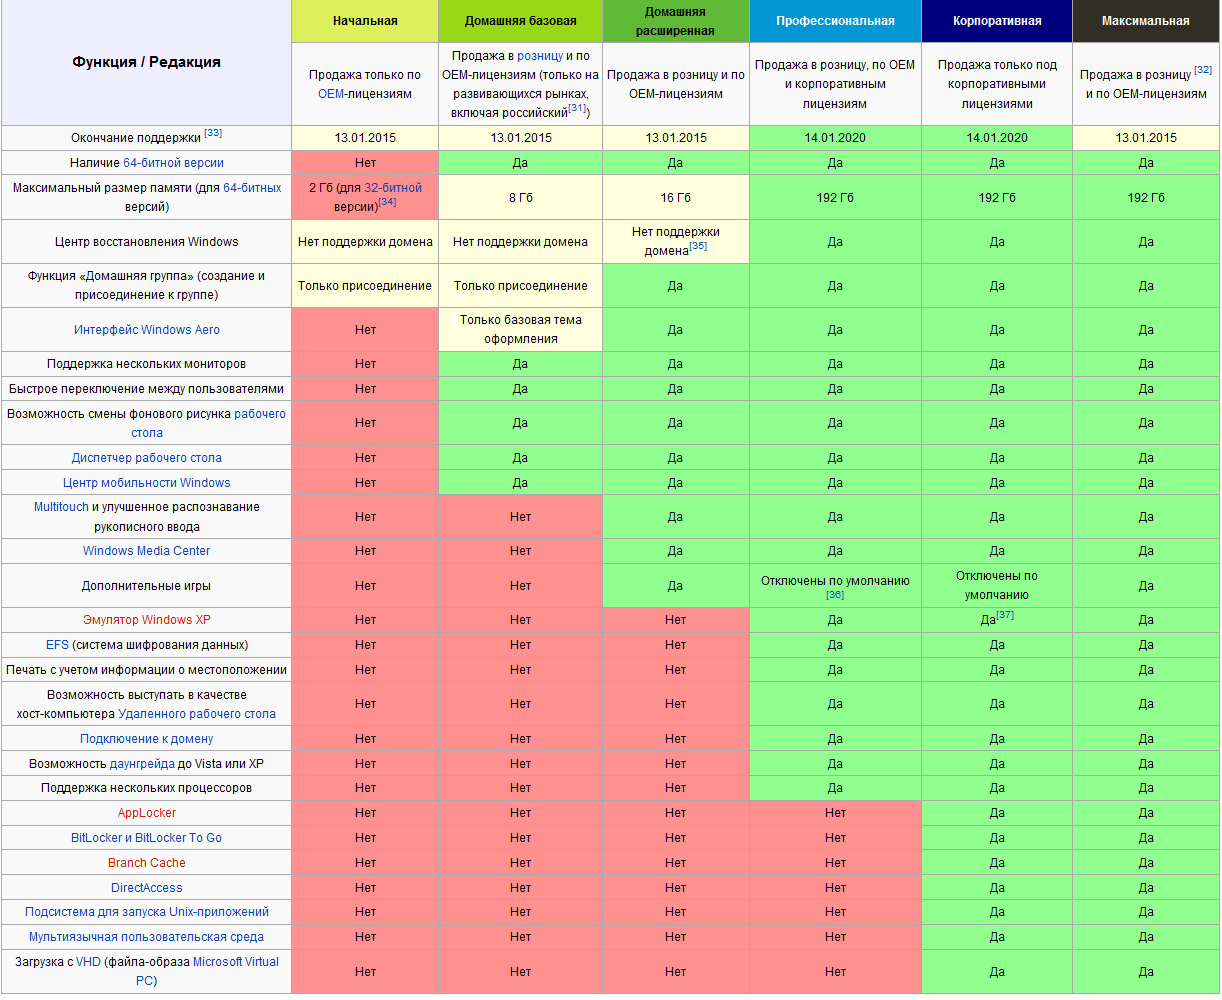 Windows 7 Maximum Verification(Revisions) Comparison